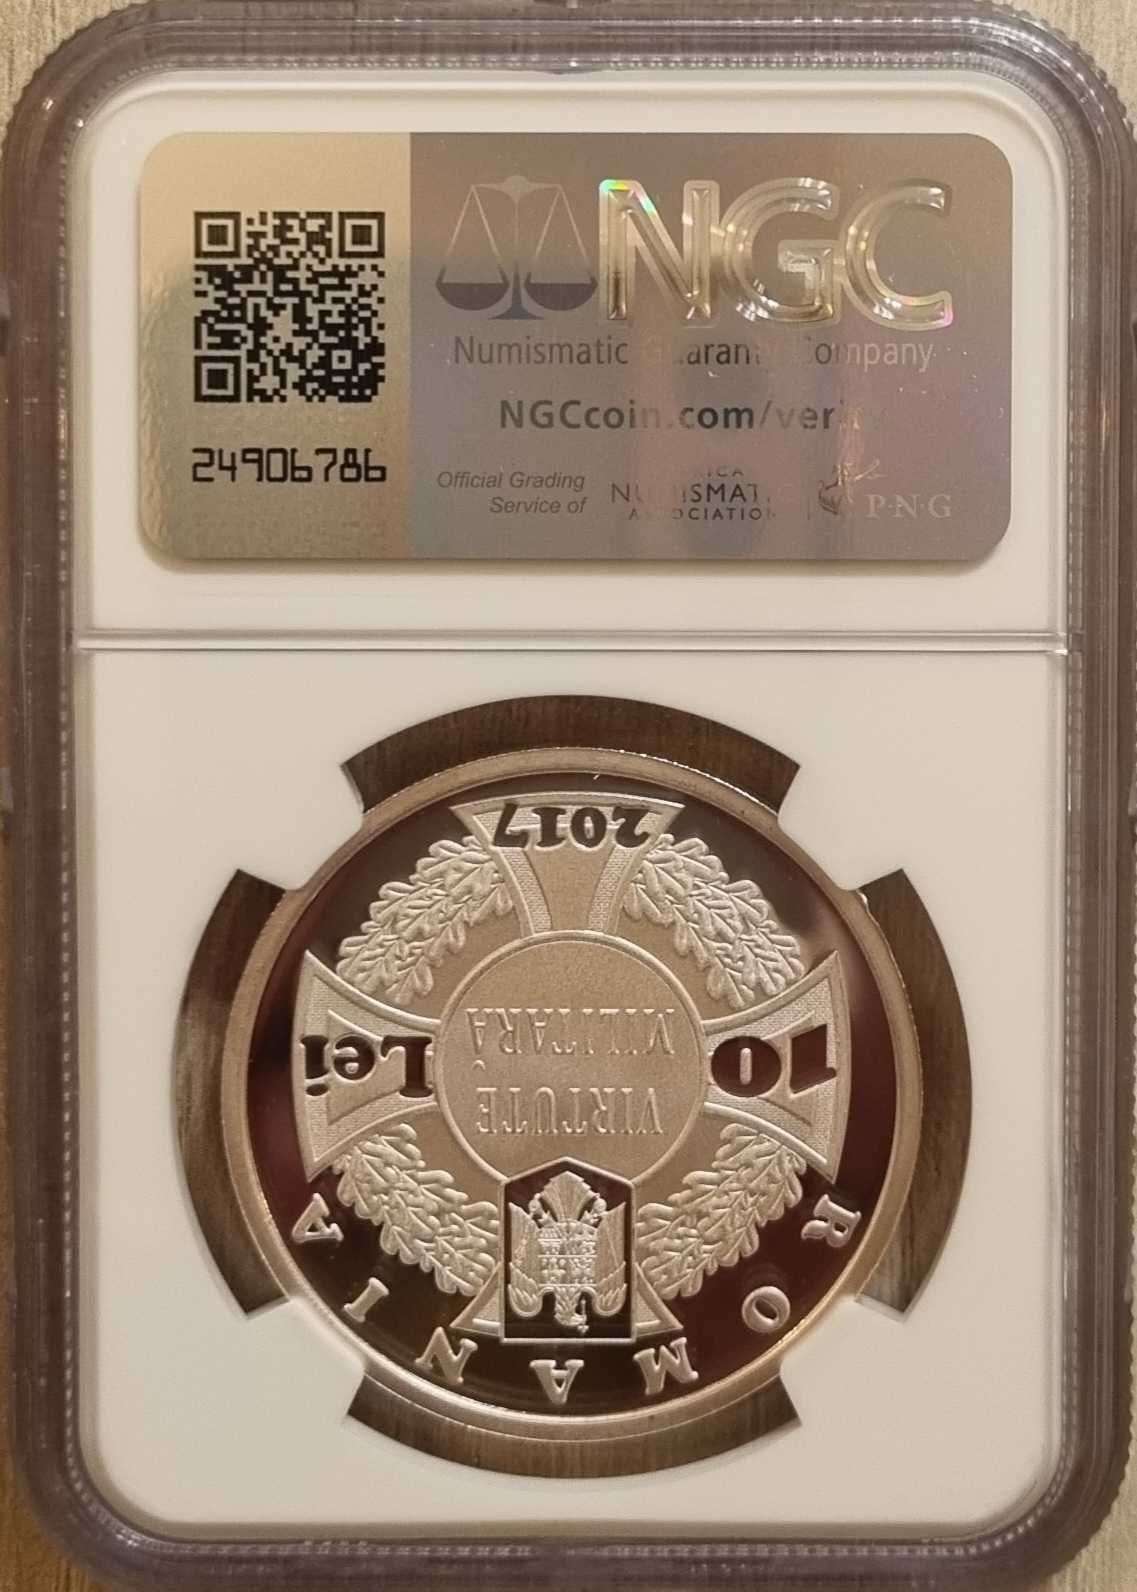 Moneda BNR 10 lei argint Ecaterina Teodoroiu gradata NGC PF 70 UC